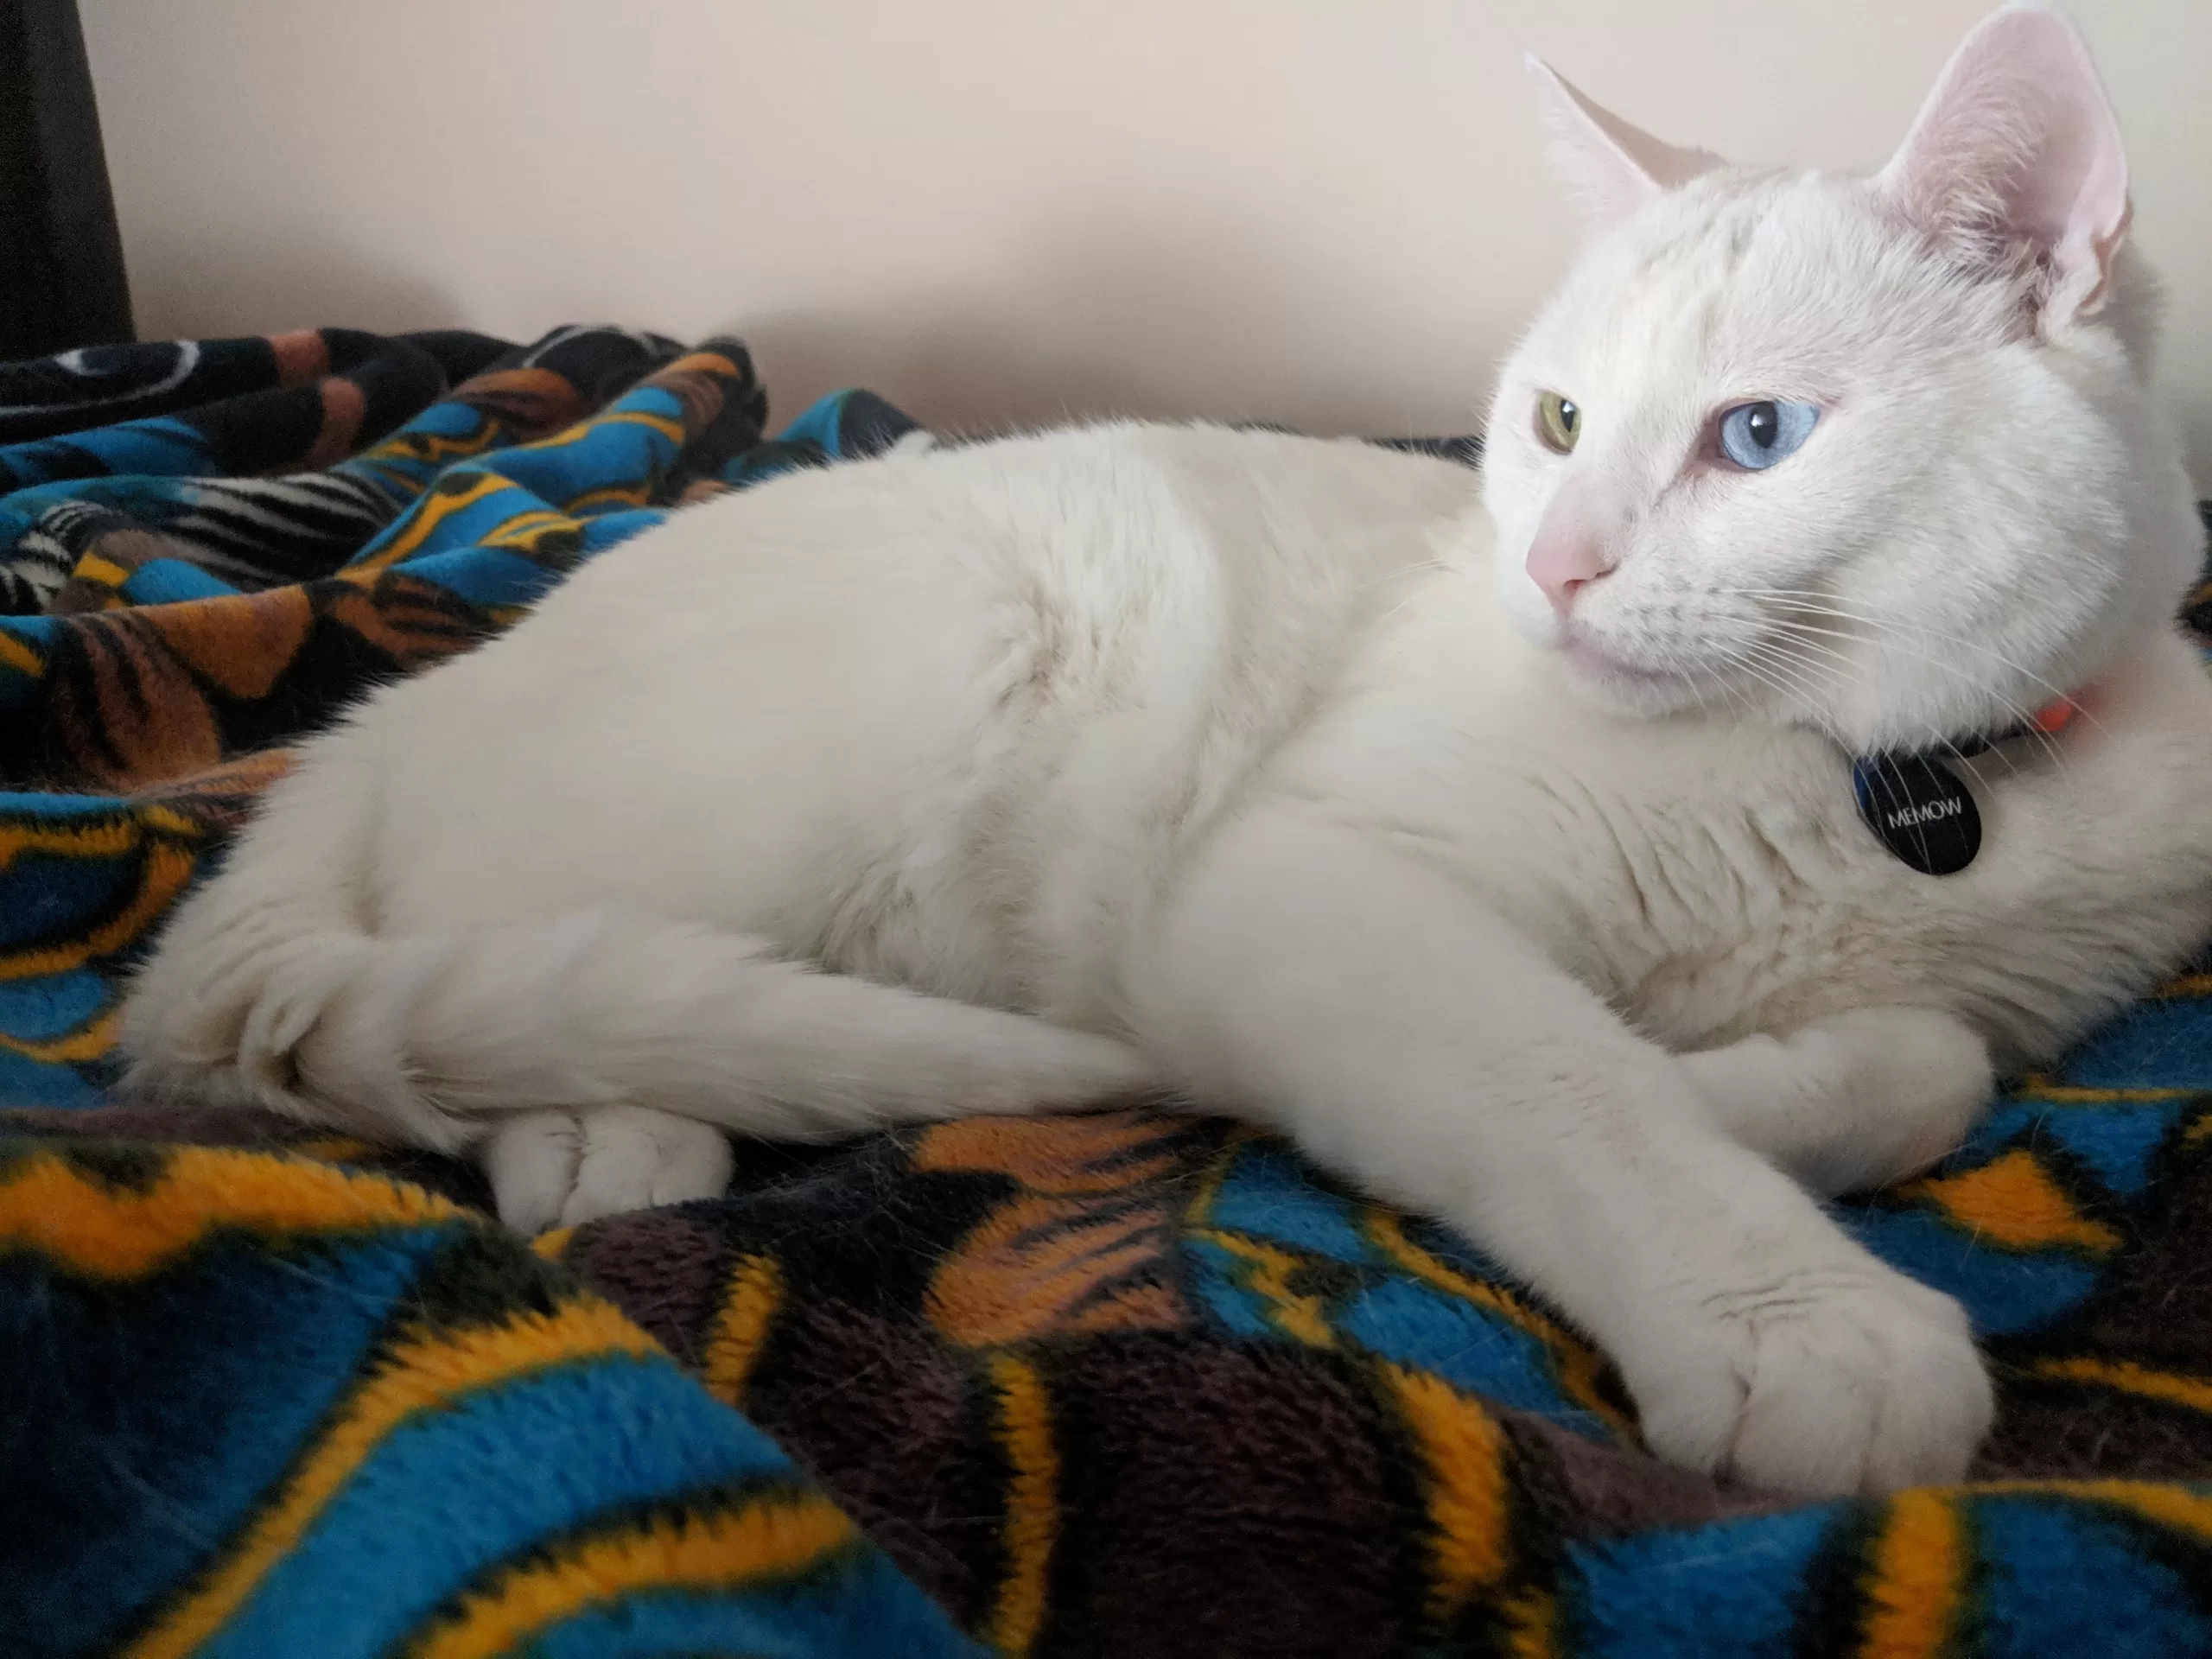 Memow - white odd eyed cat for adoption in Edmonton ab.